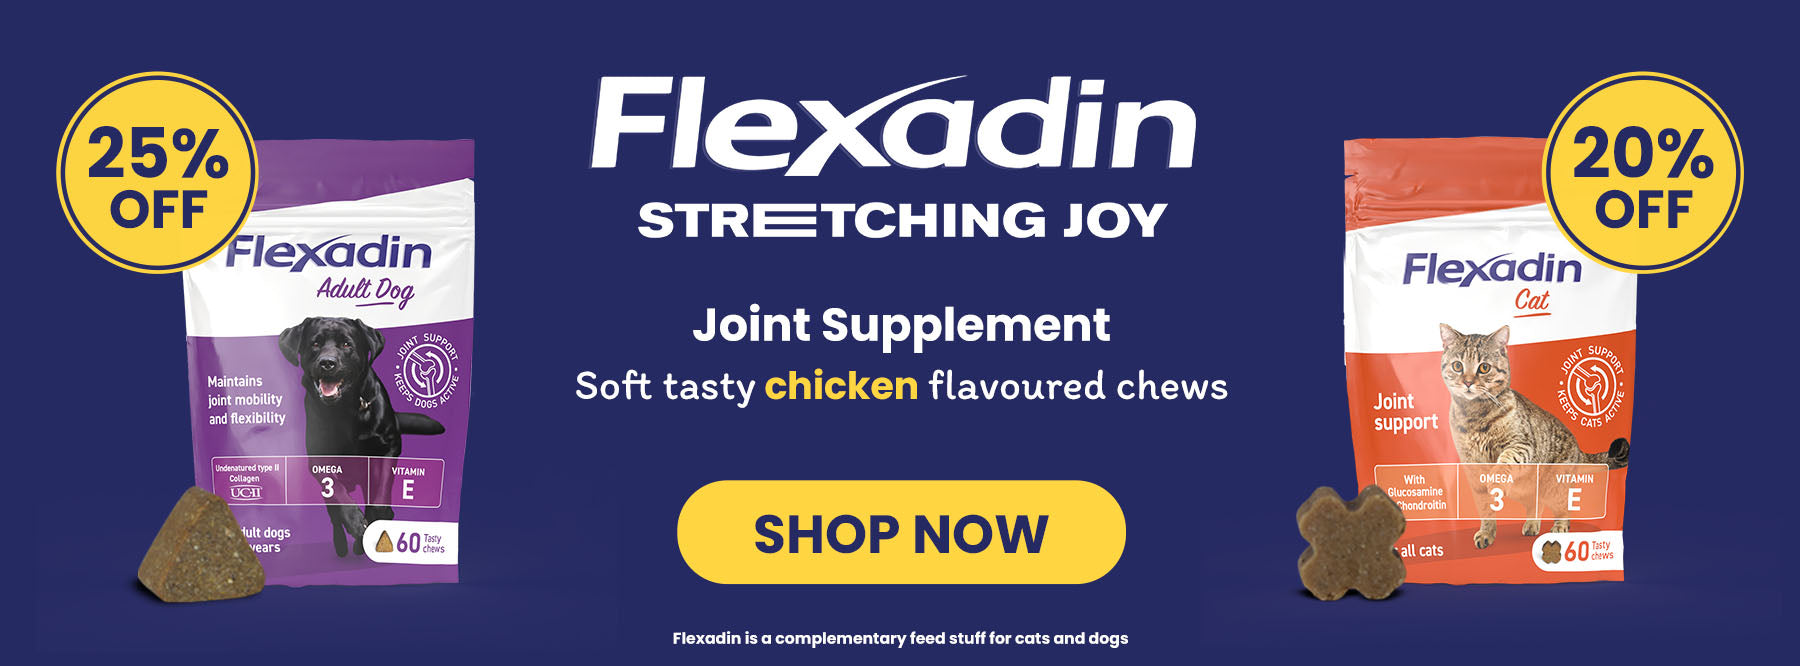 Huge Savings On Flexadin!